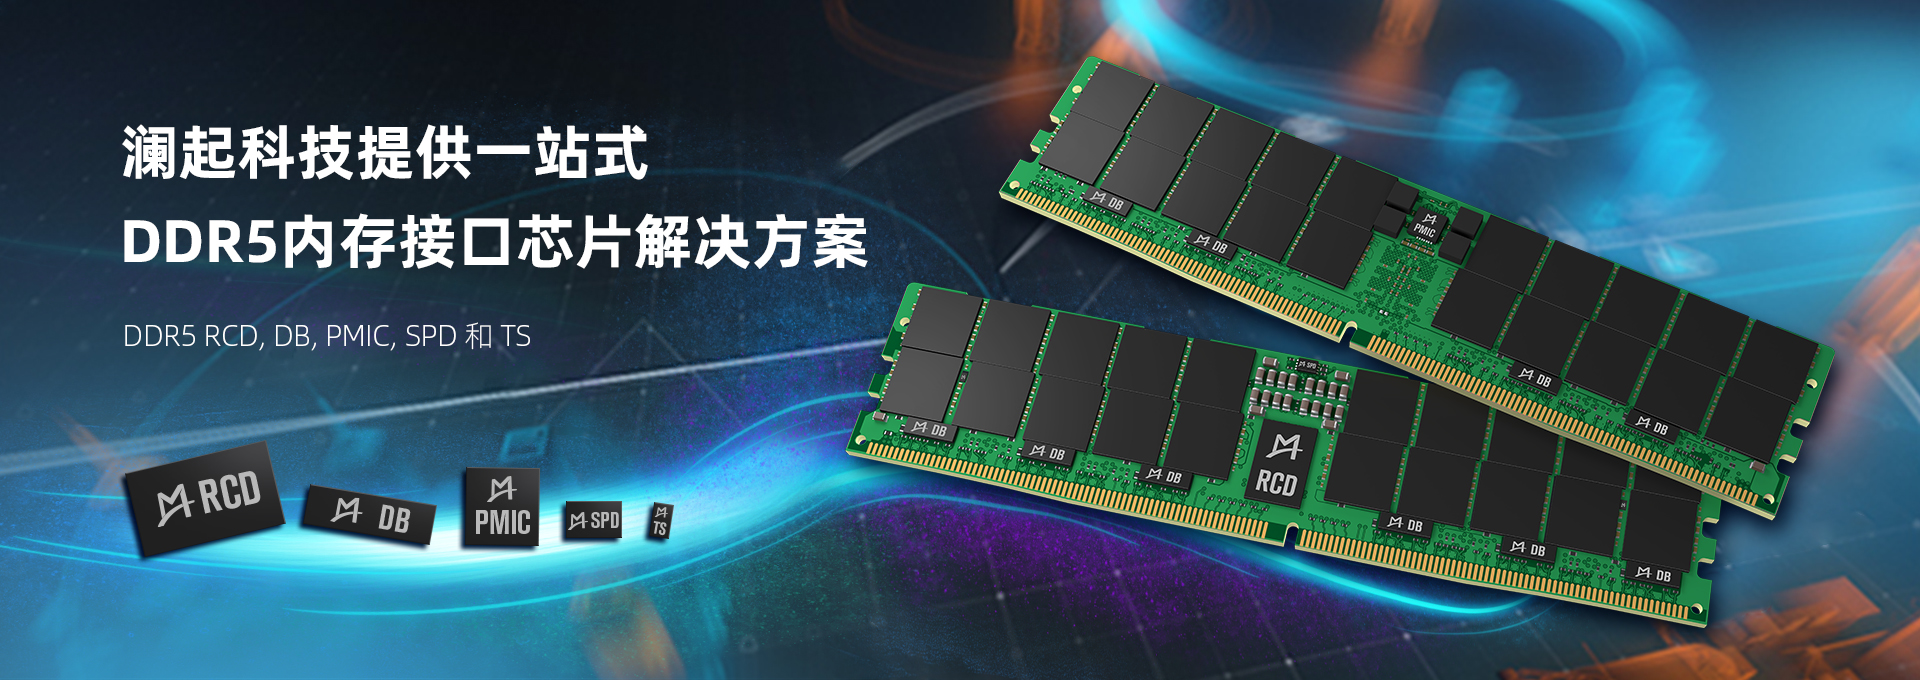 DDR5 Solution